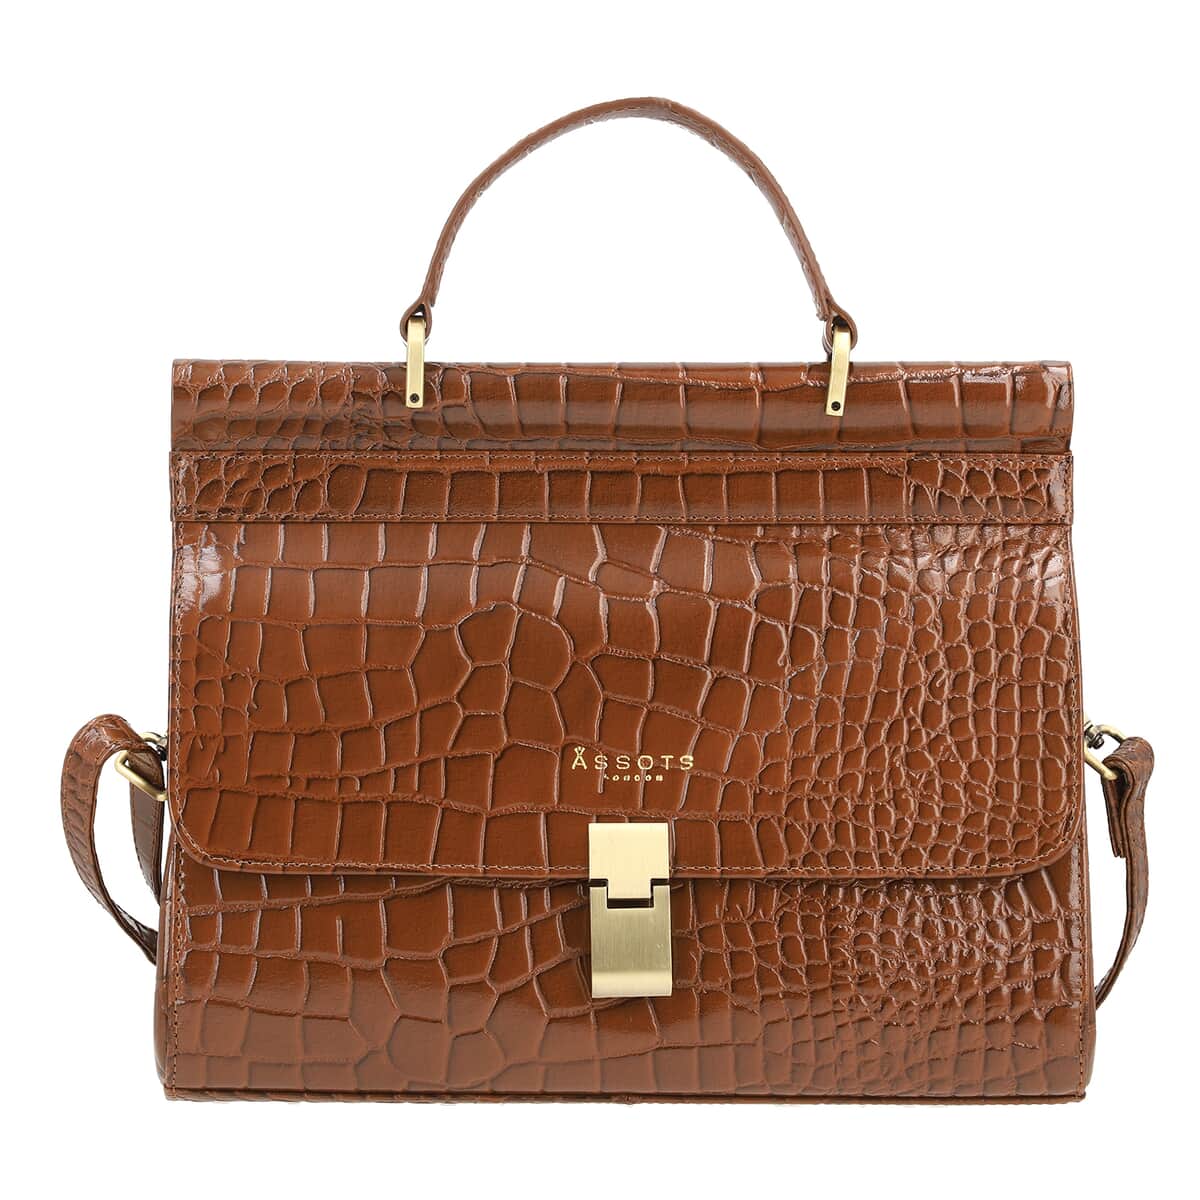 Assots London Tan Genuine Leather Croco Embossed Satchel Bag, Ladies Purse Handbag With Adjustable & Detachable Shoulder Strap And Button Closure (11.61X3.54X9.64) image number 0